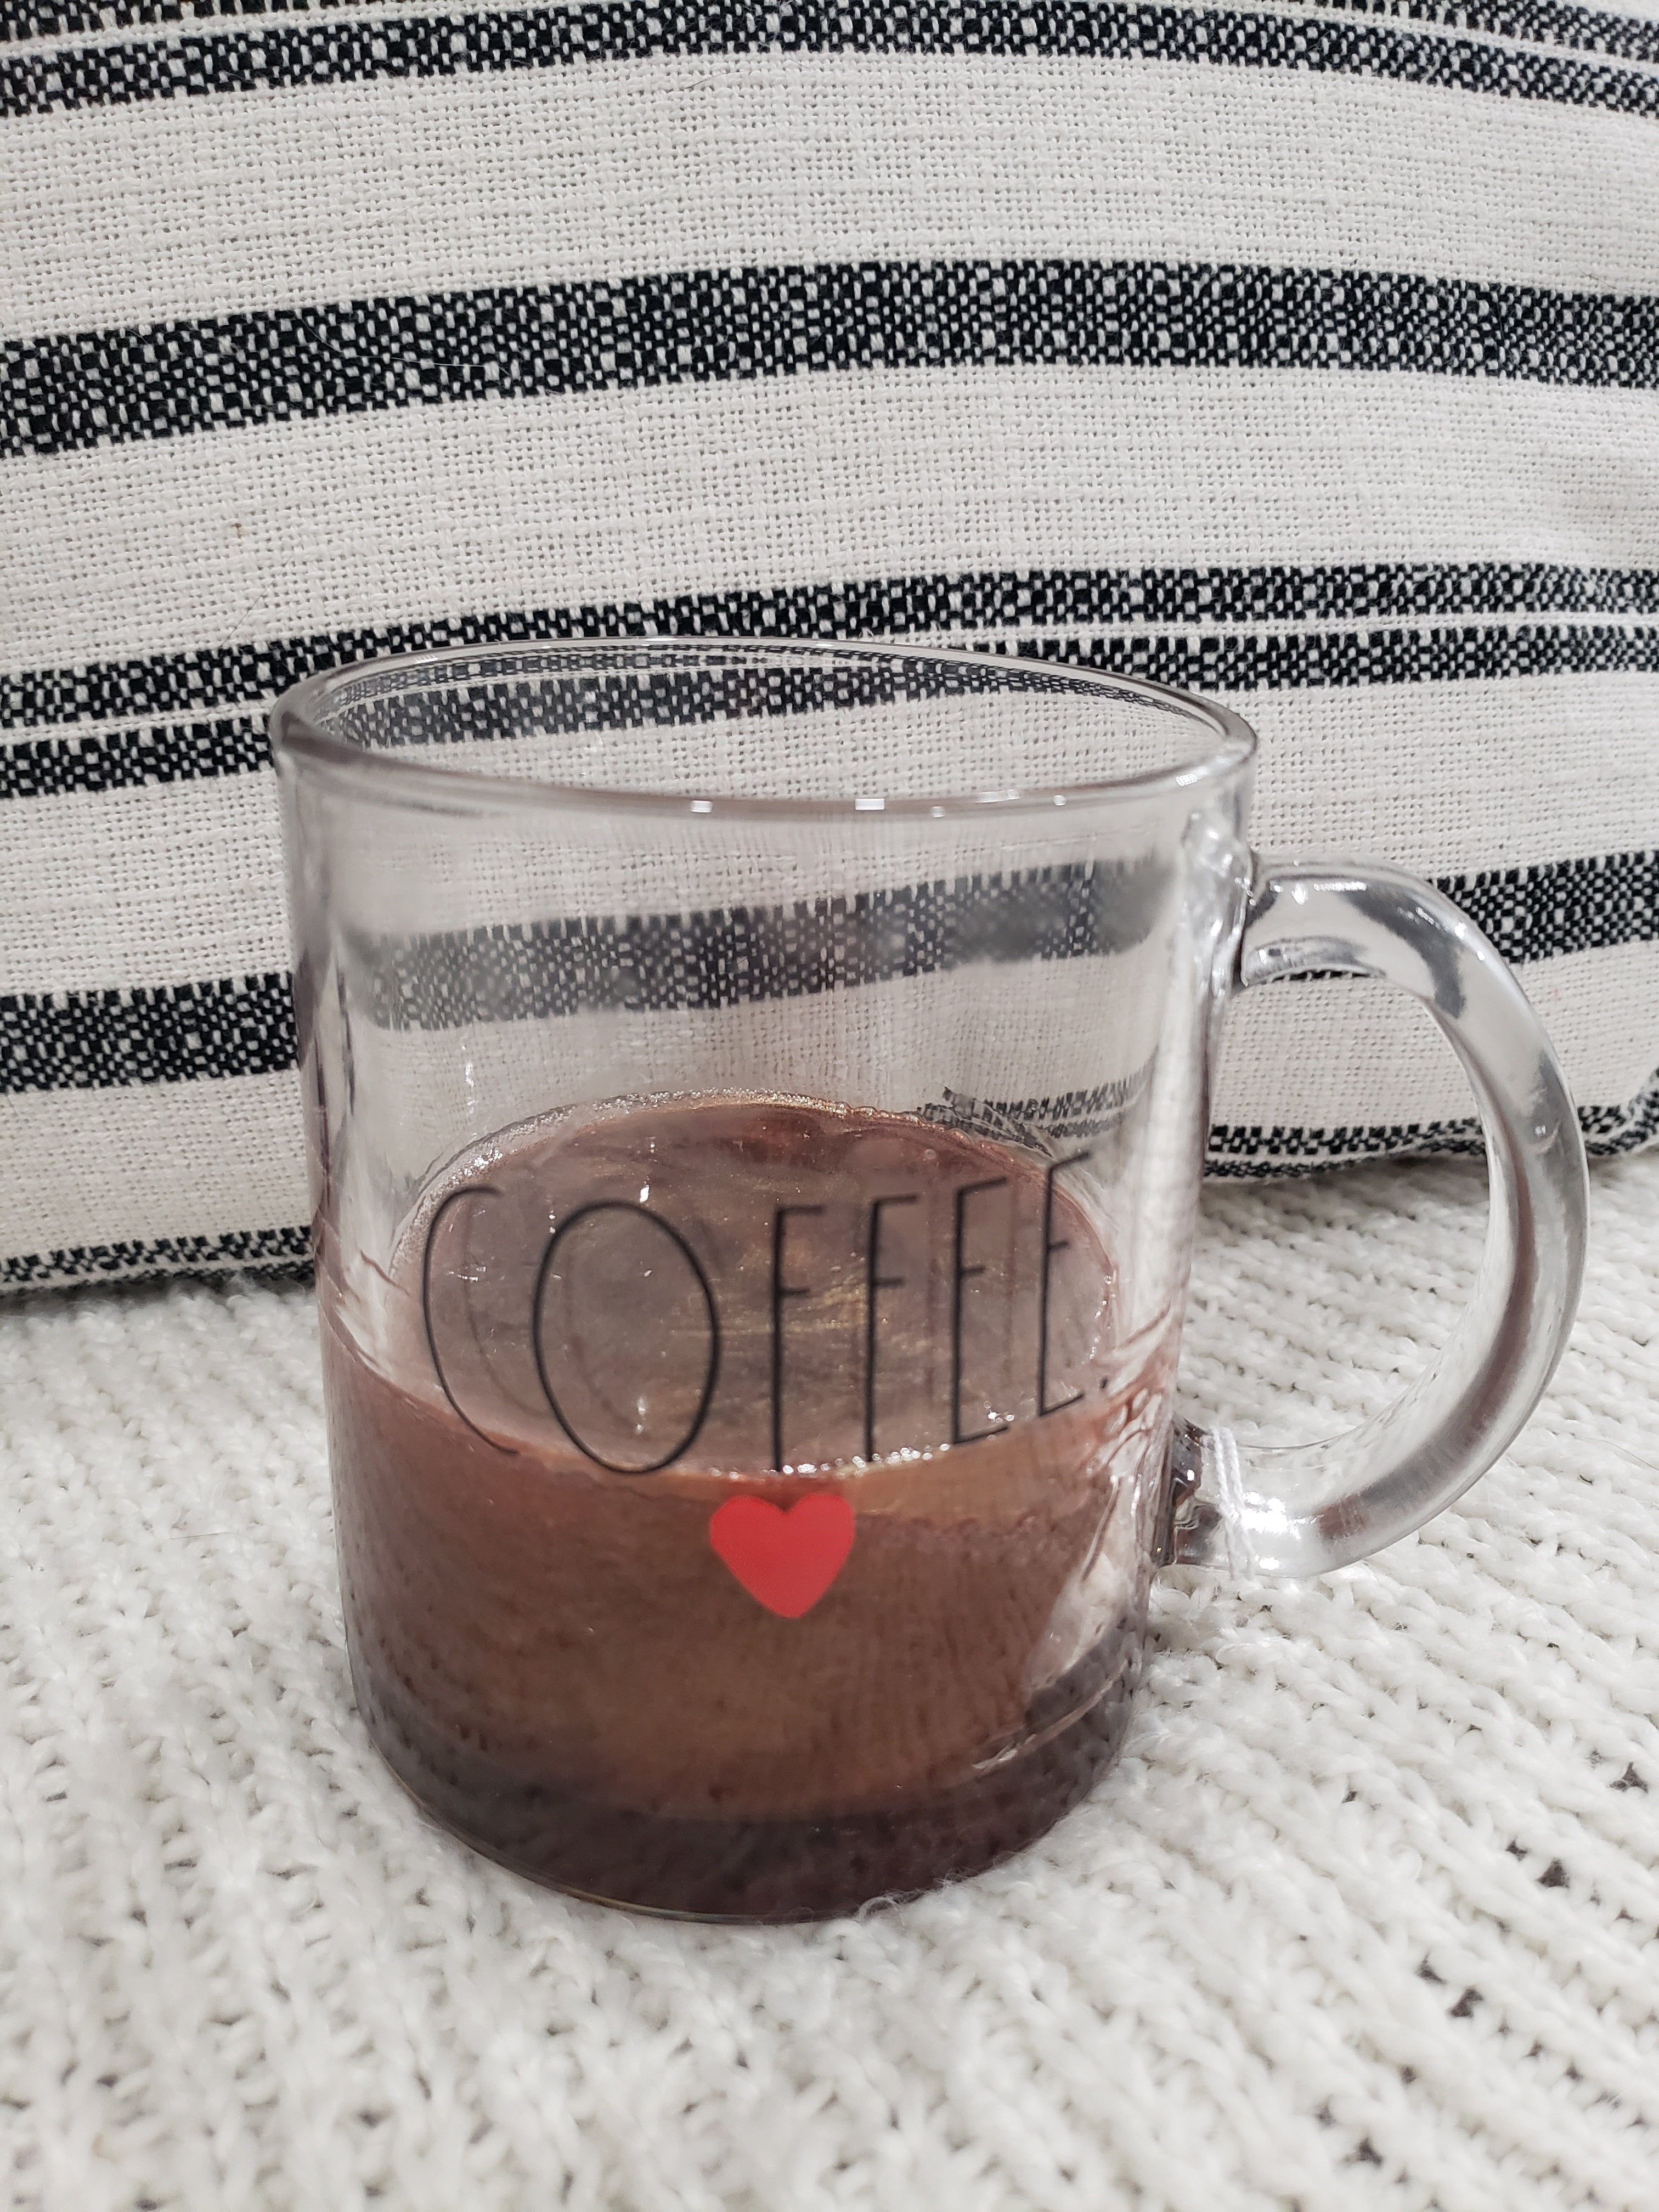 Glass Mug - Coffee Love